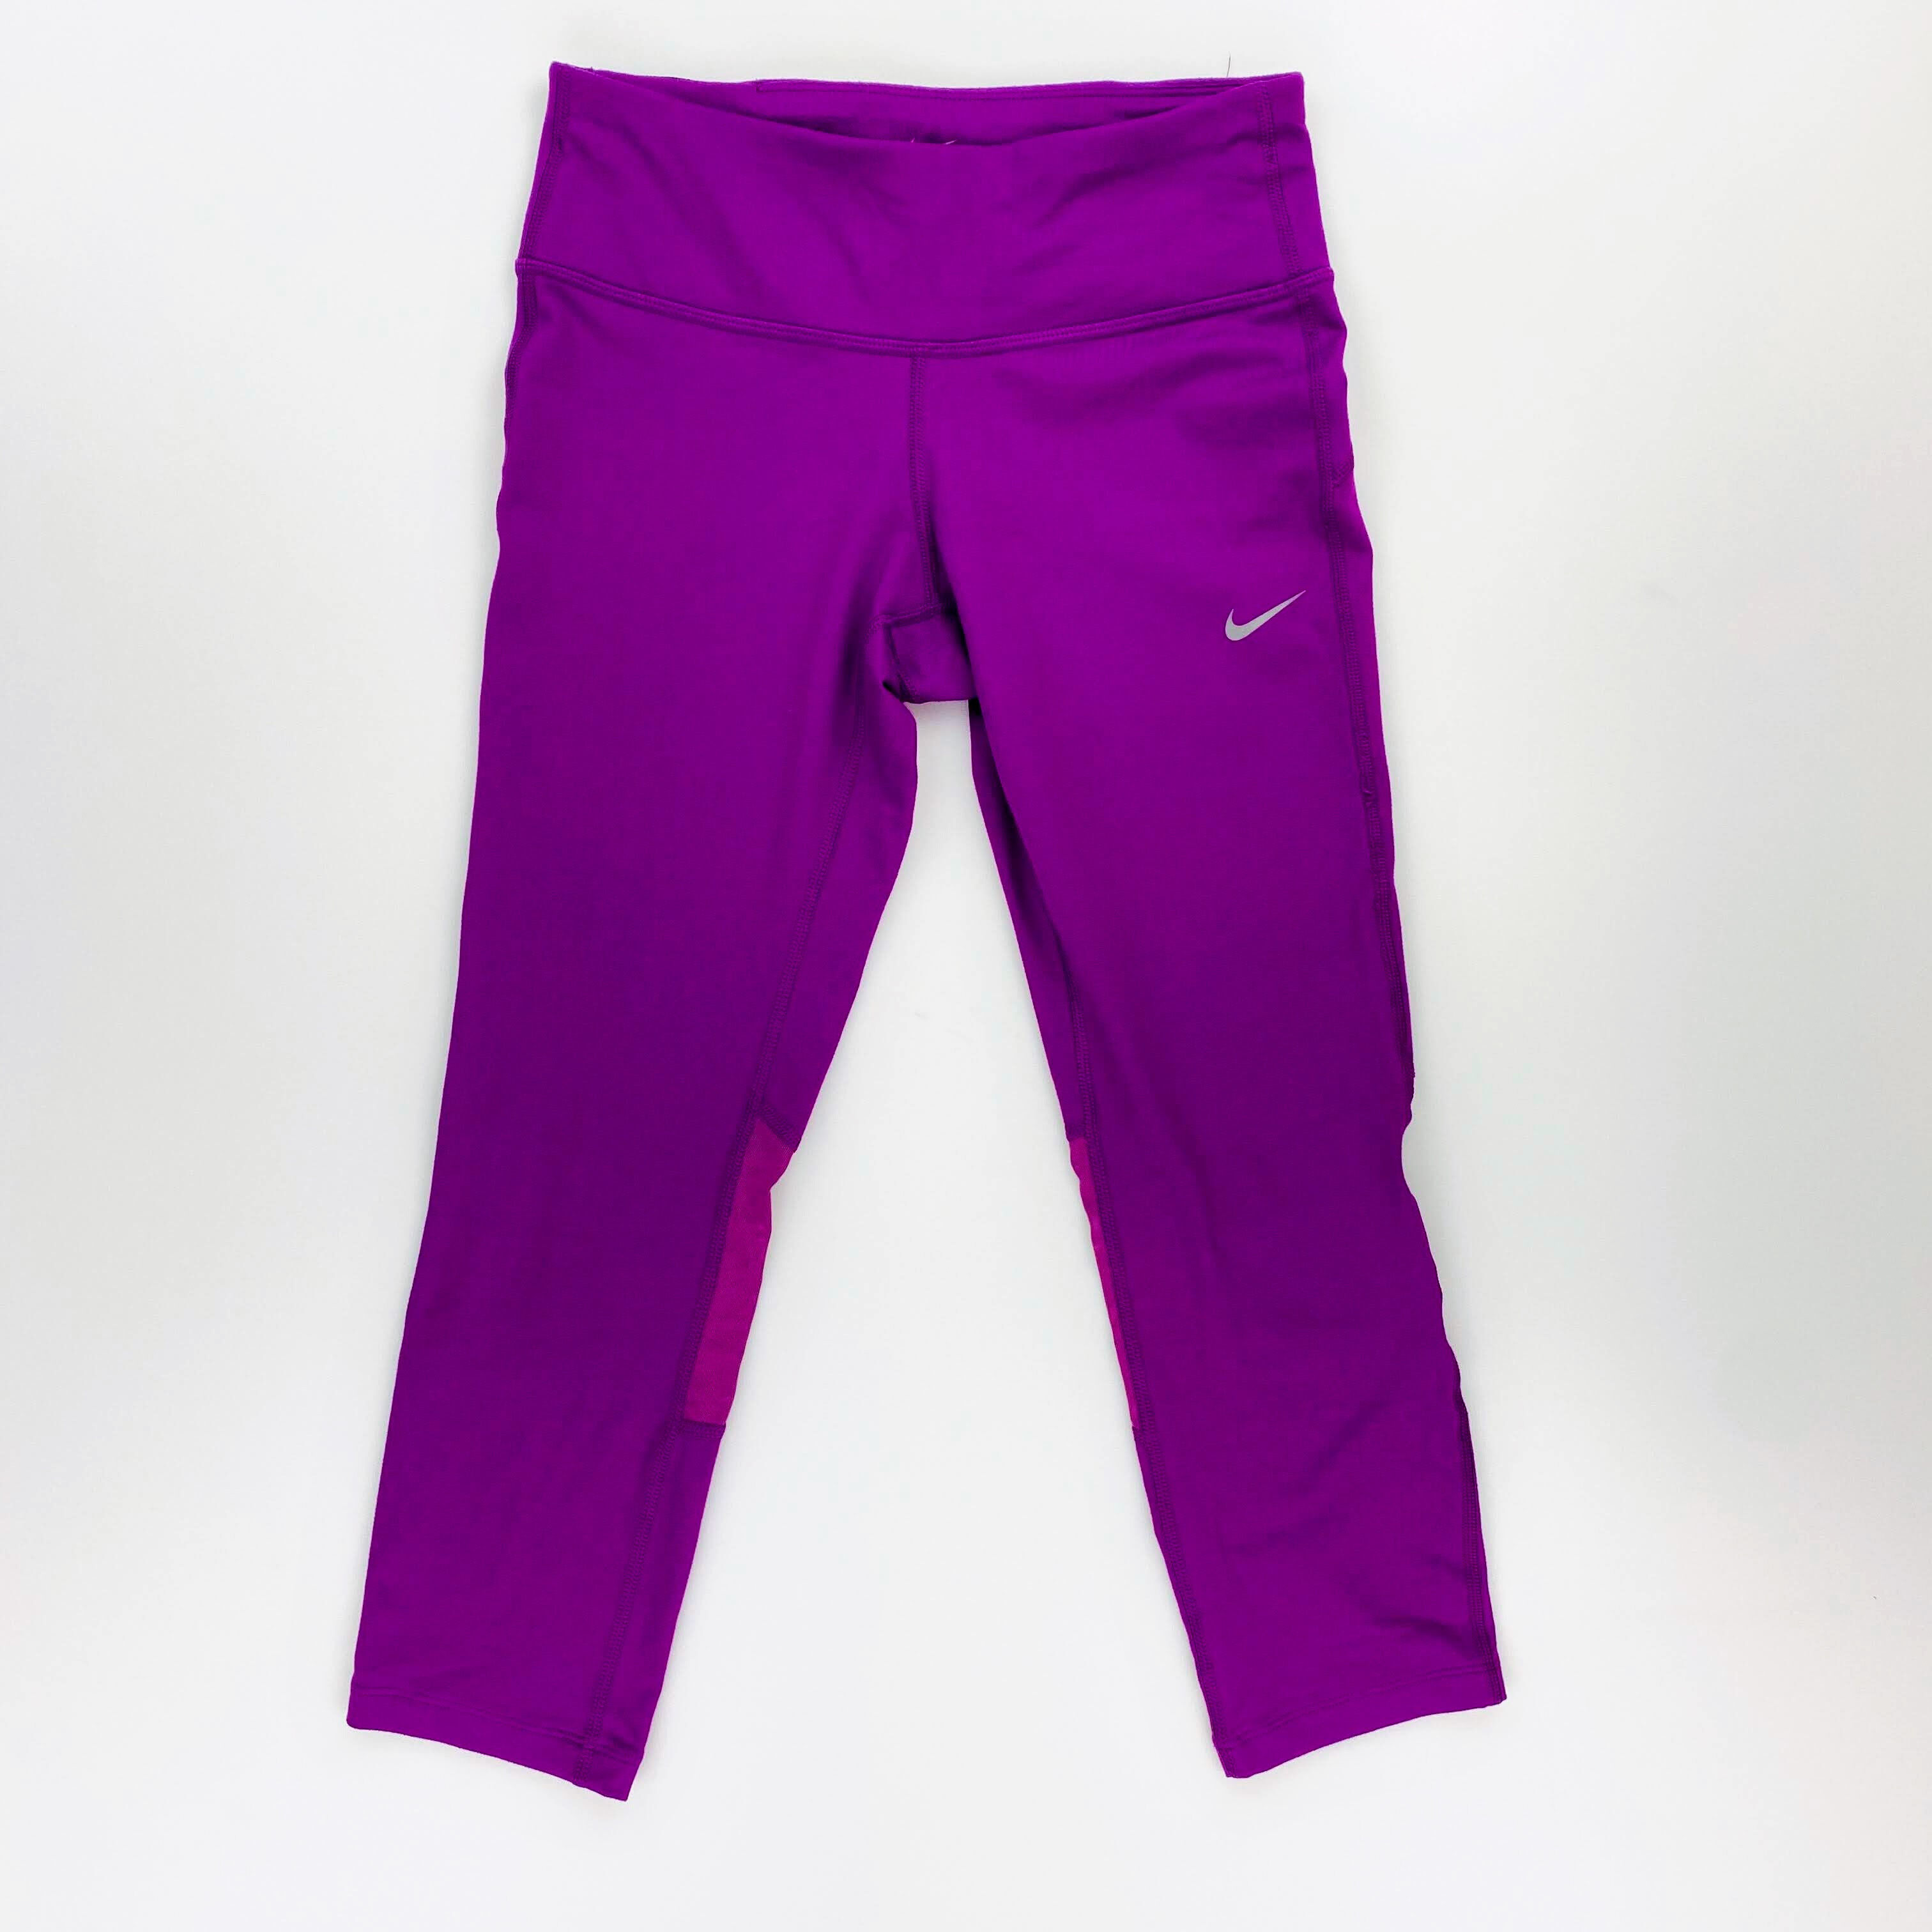 Nike Seconde main Collant running femme - Violet - XS | Hardloop